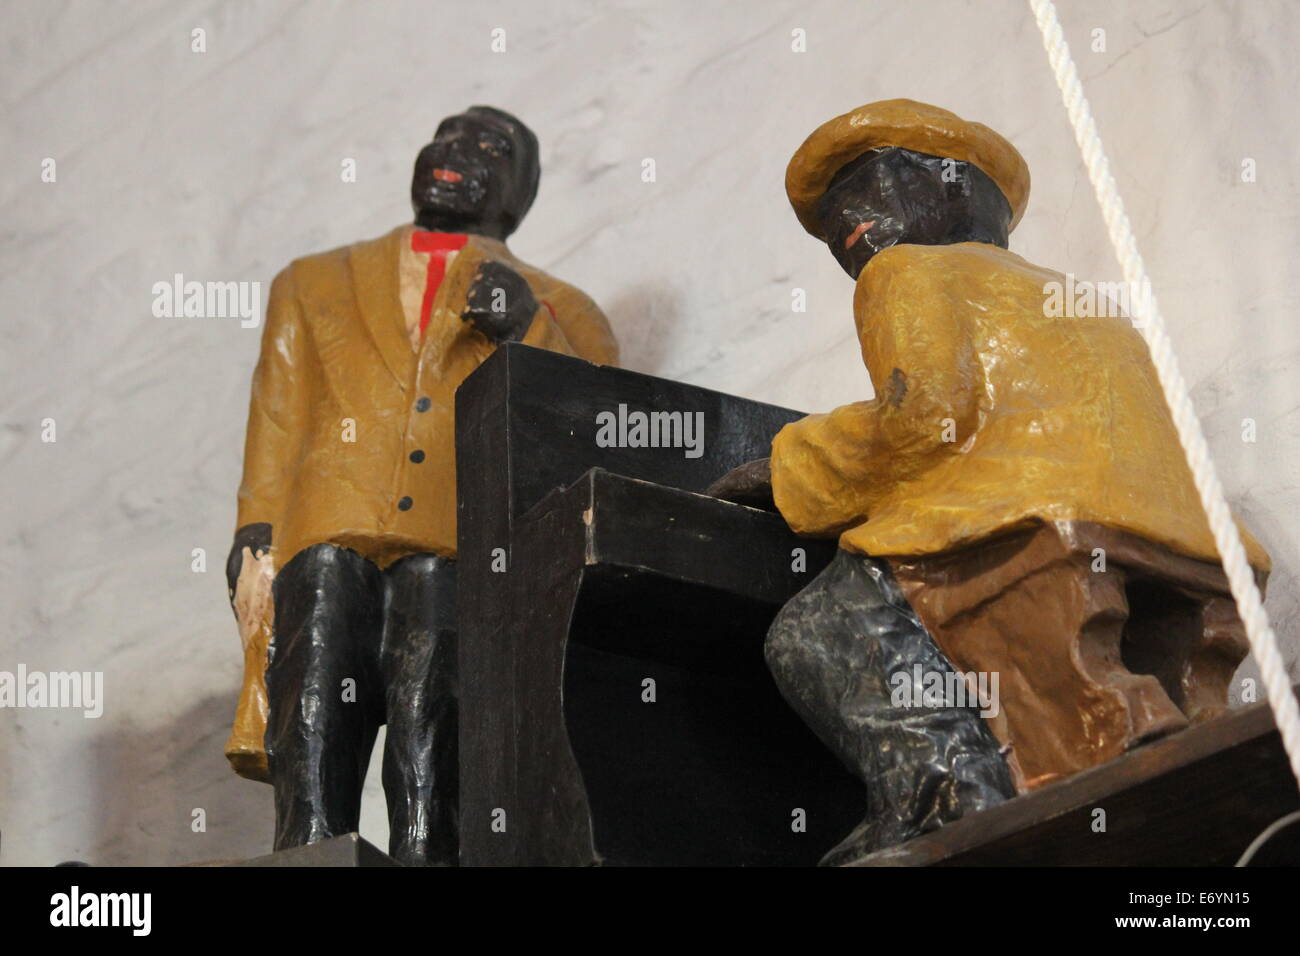 Sculptured jazz figures displayed in a British pub Stock Photo